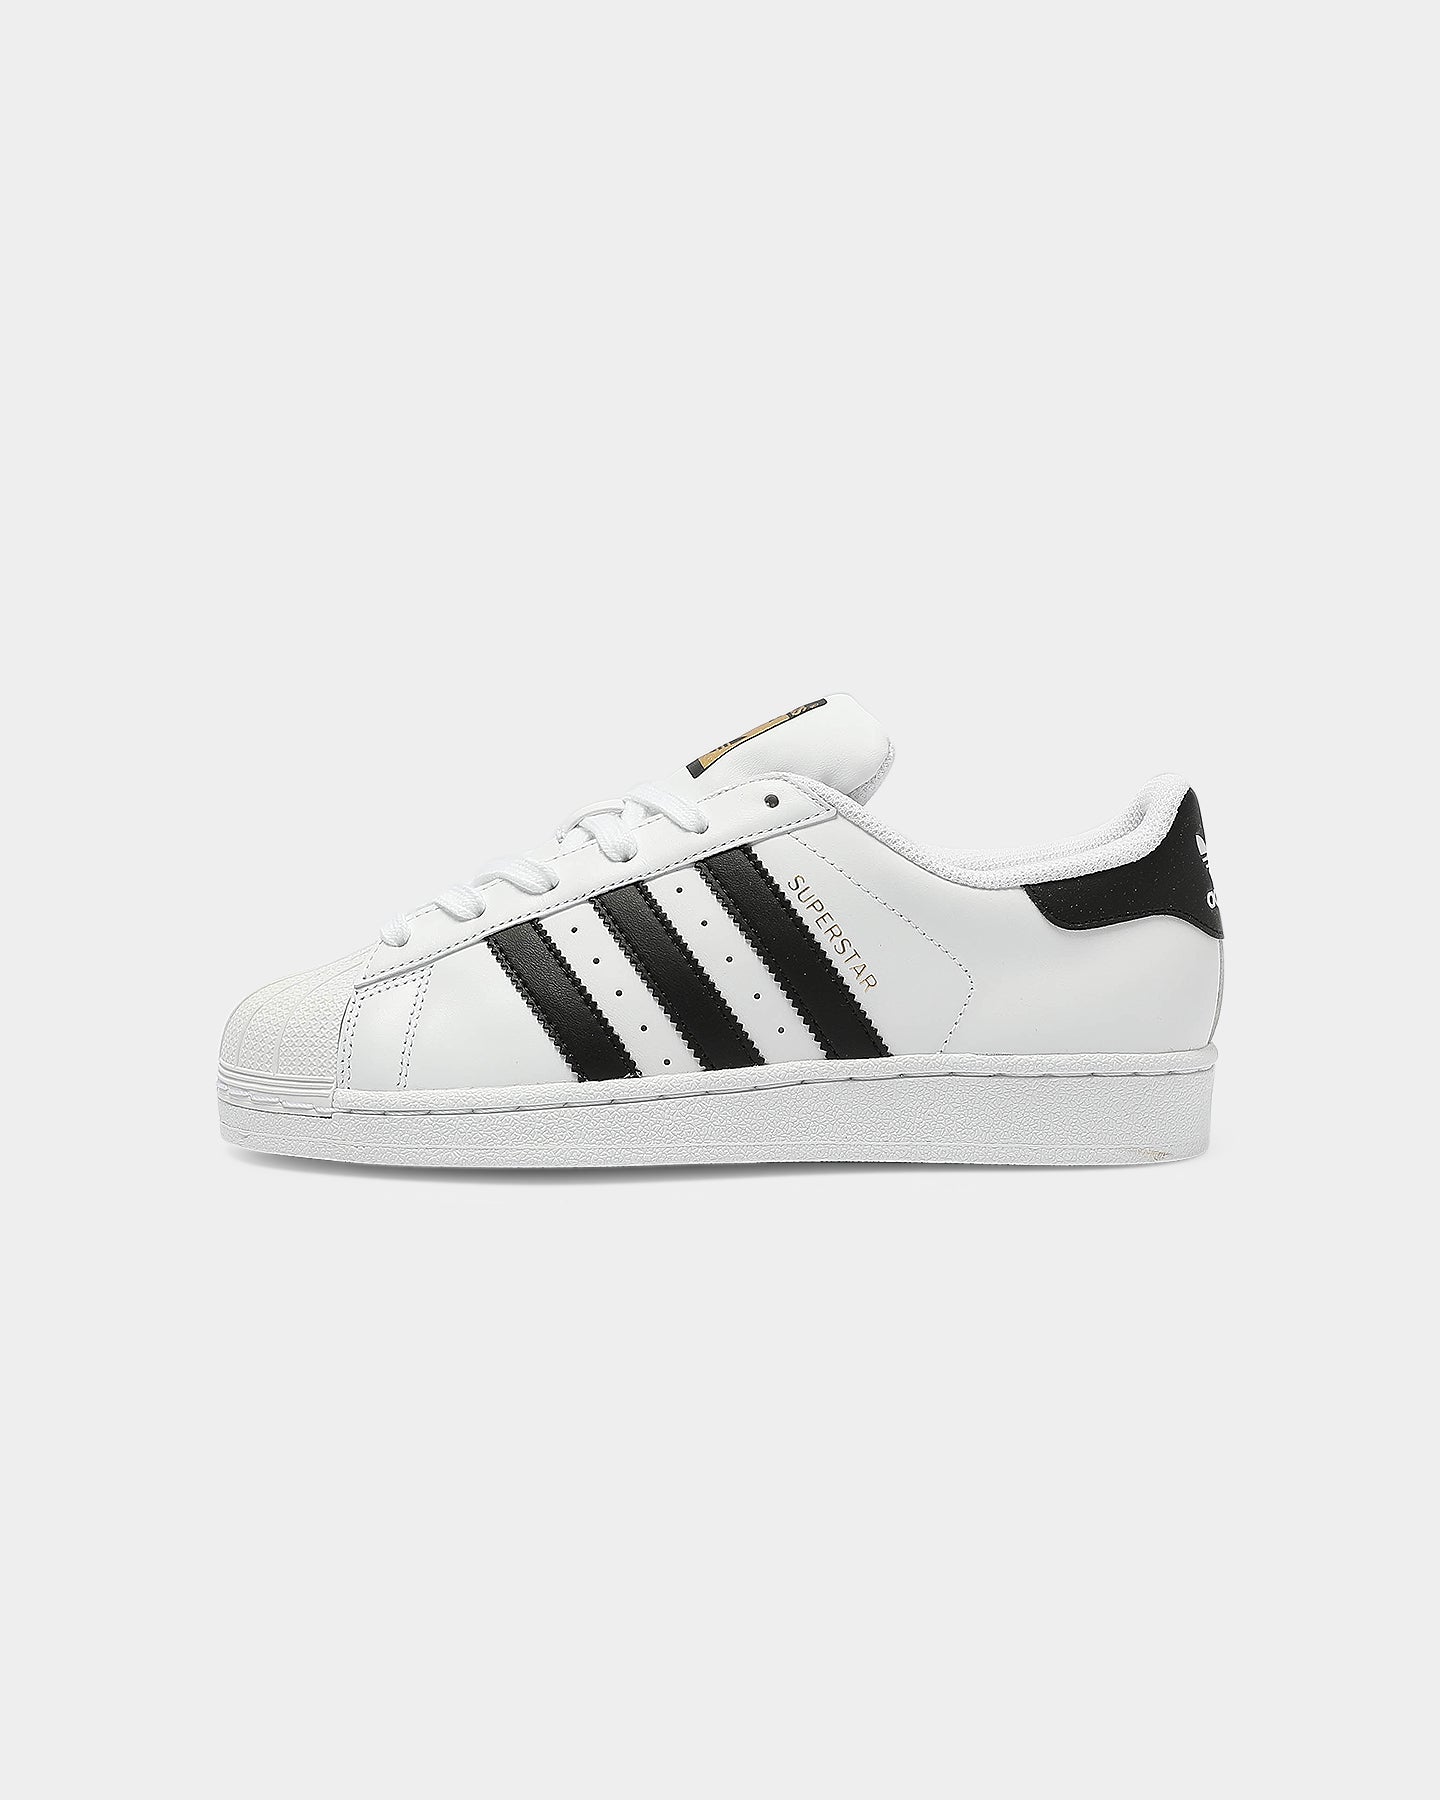 Adidas Originals Superstar Shoe White 